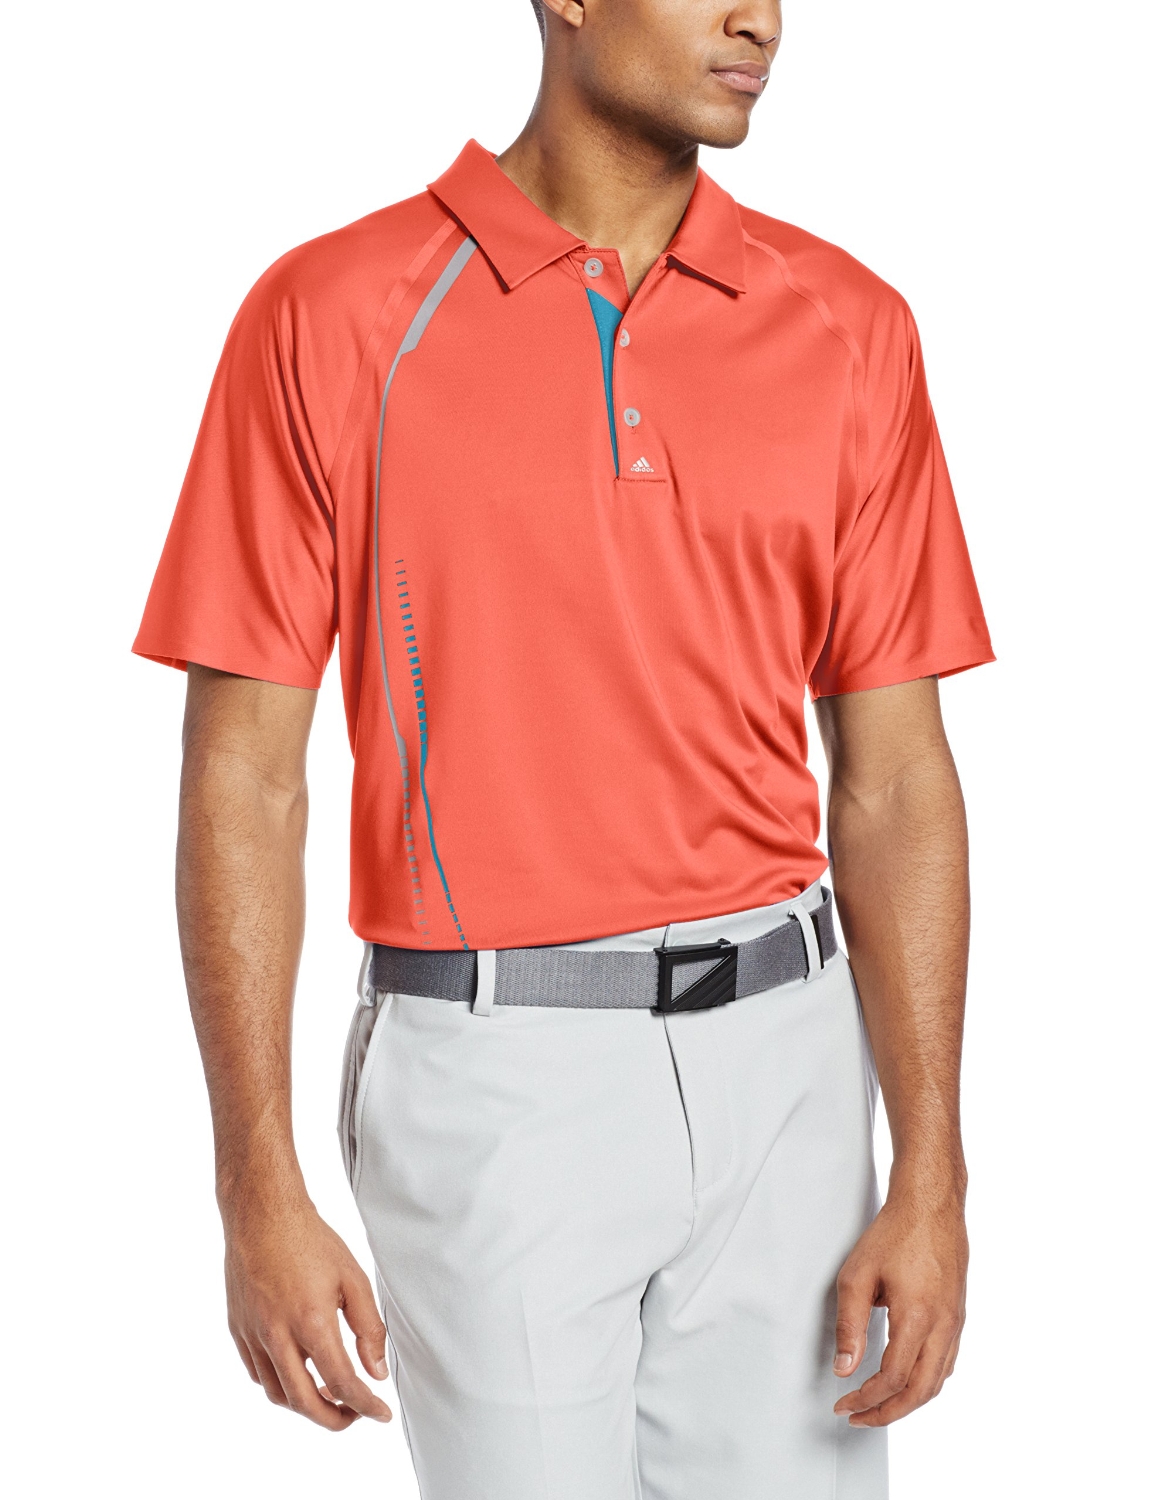 Adidas Mens Puremotion Tour Climacool Graphic Print Golf Shirts